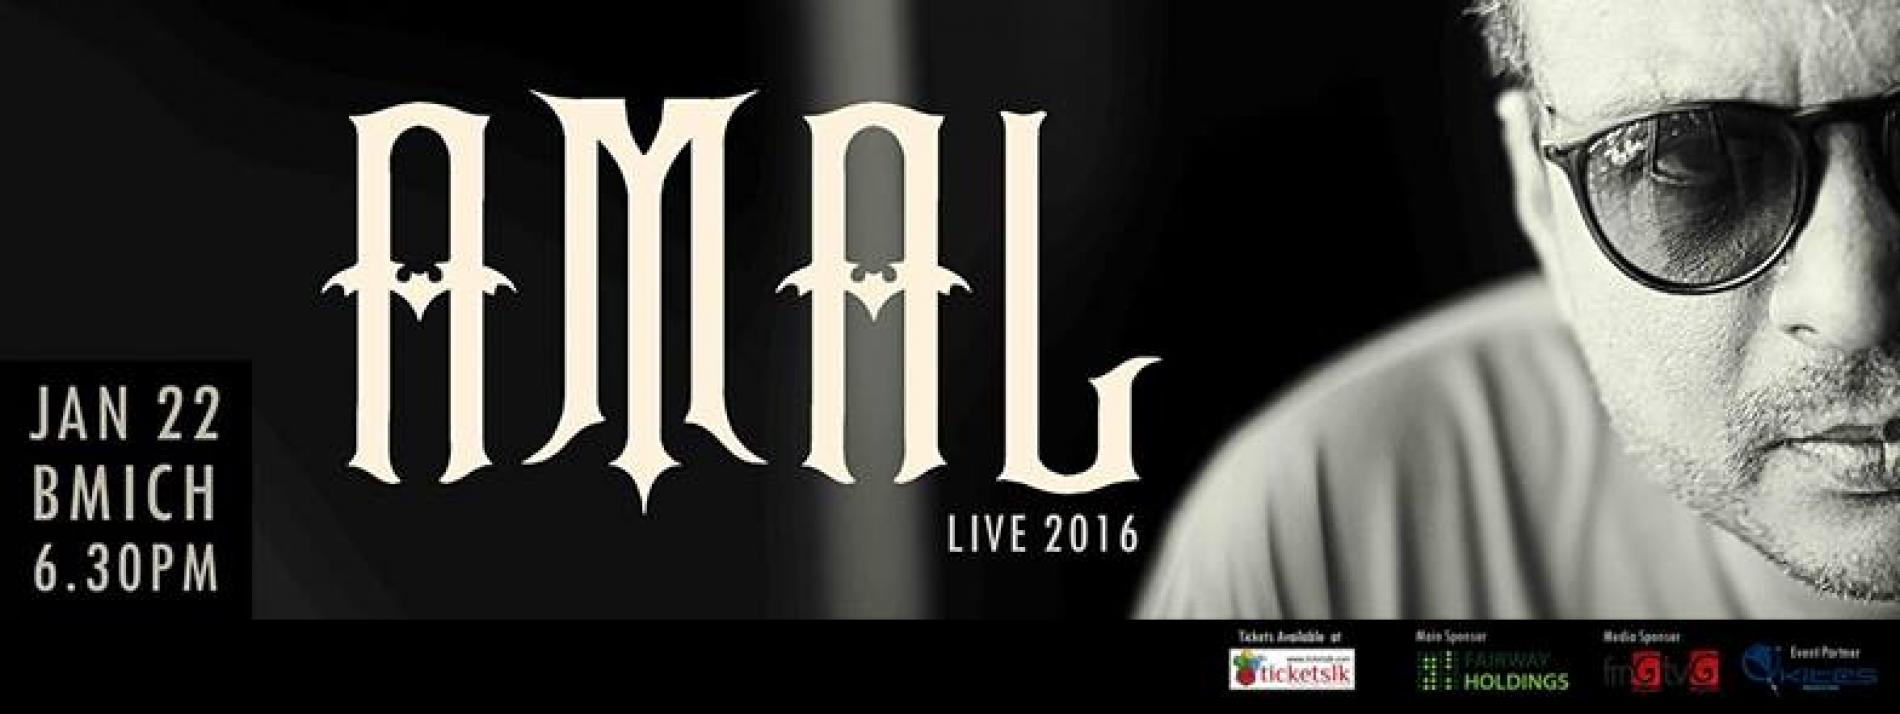 Amal Live 2016